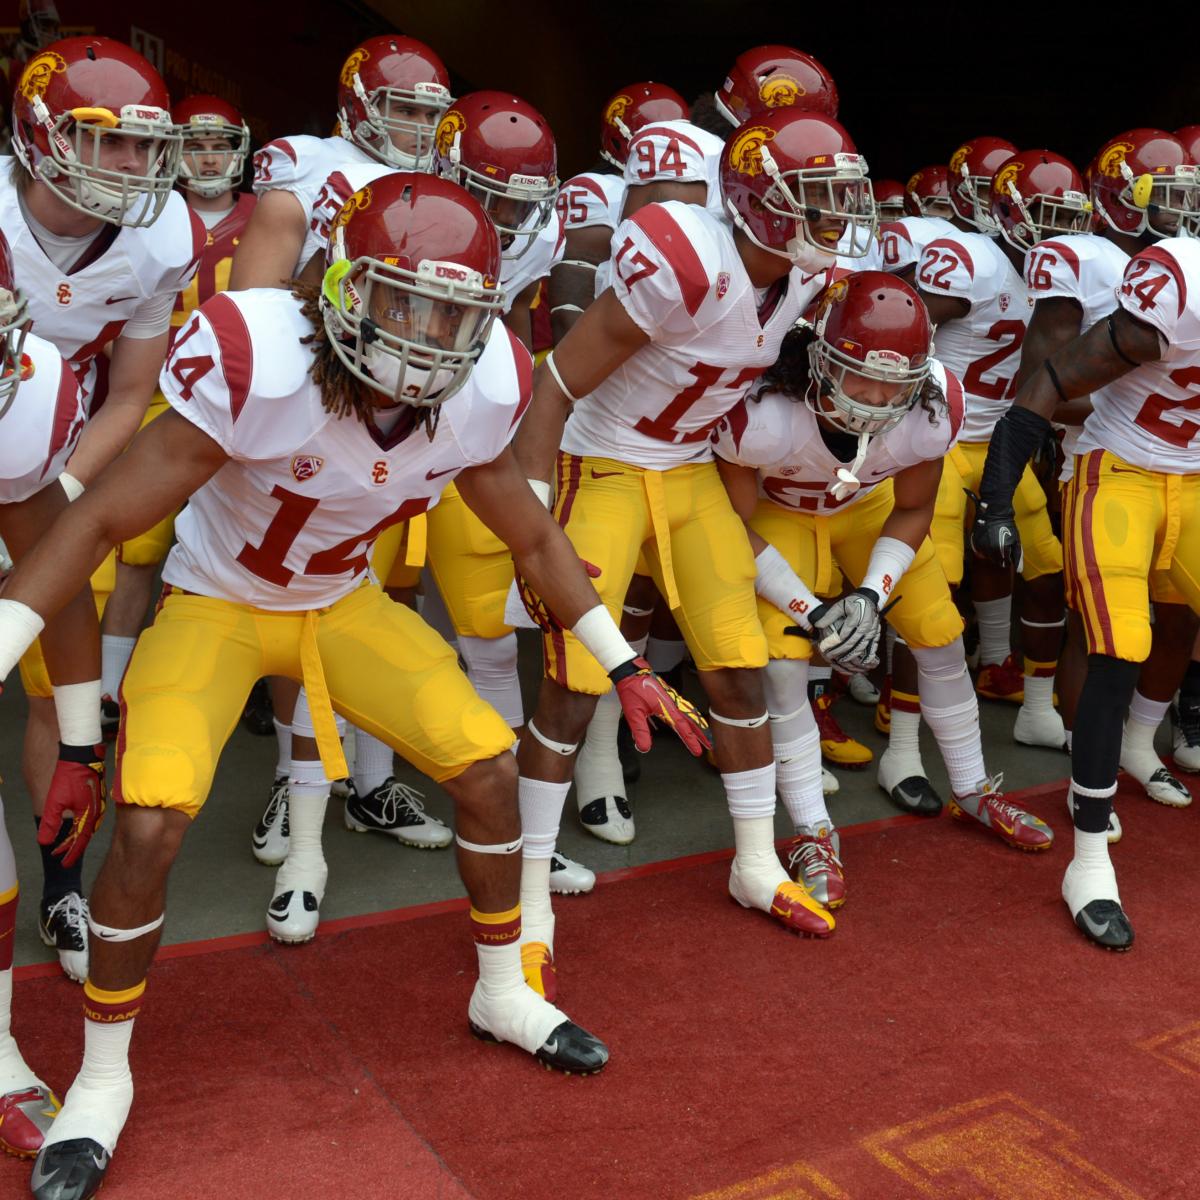 USC Football: Watch 1st Annual Trojans Bowl, Where Walk-Ons Play, Starters Coach | News, Scores